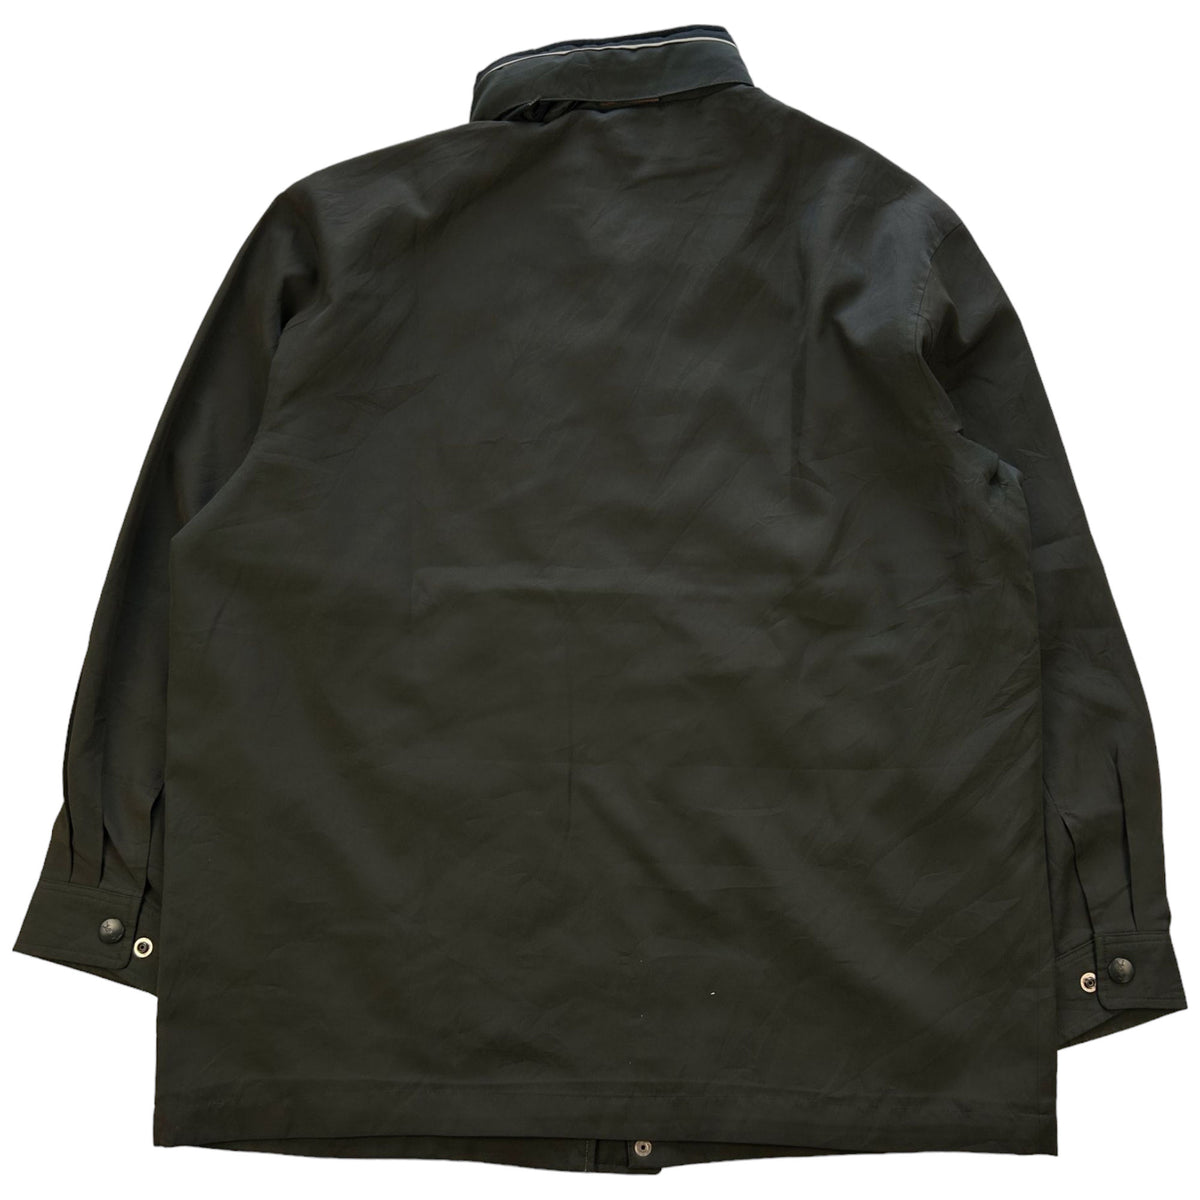 Vintage YSL Yves Saint Laurent Zip Up Jacket Size XL